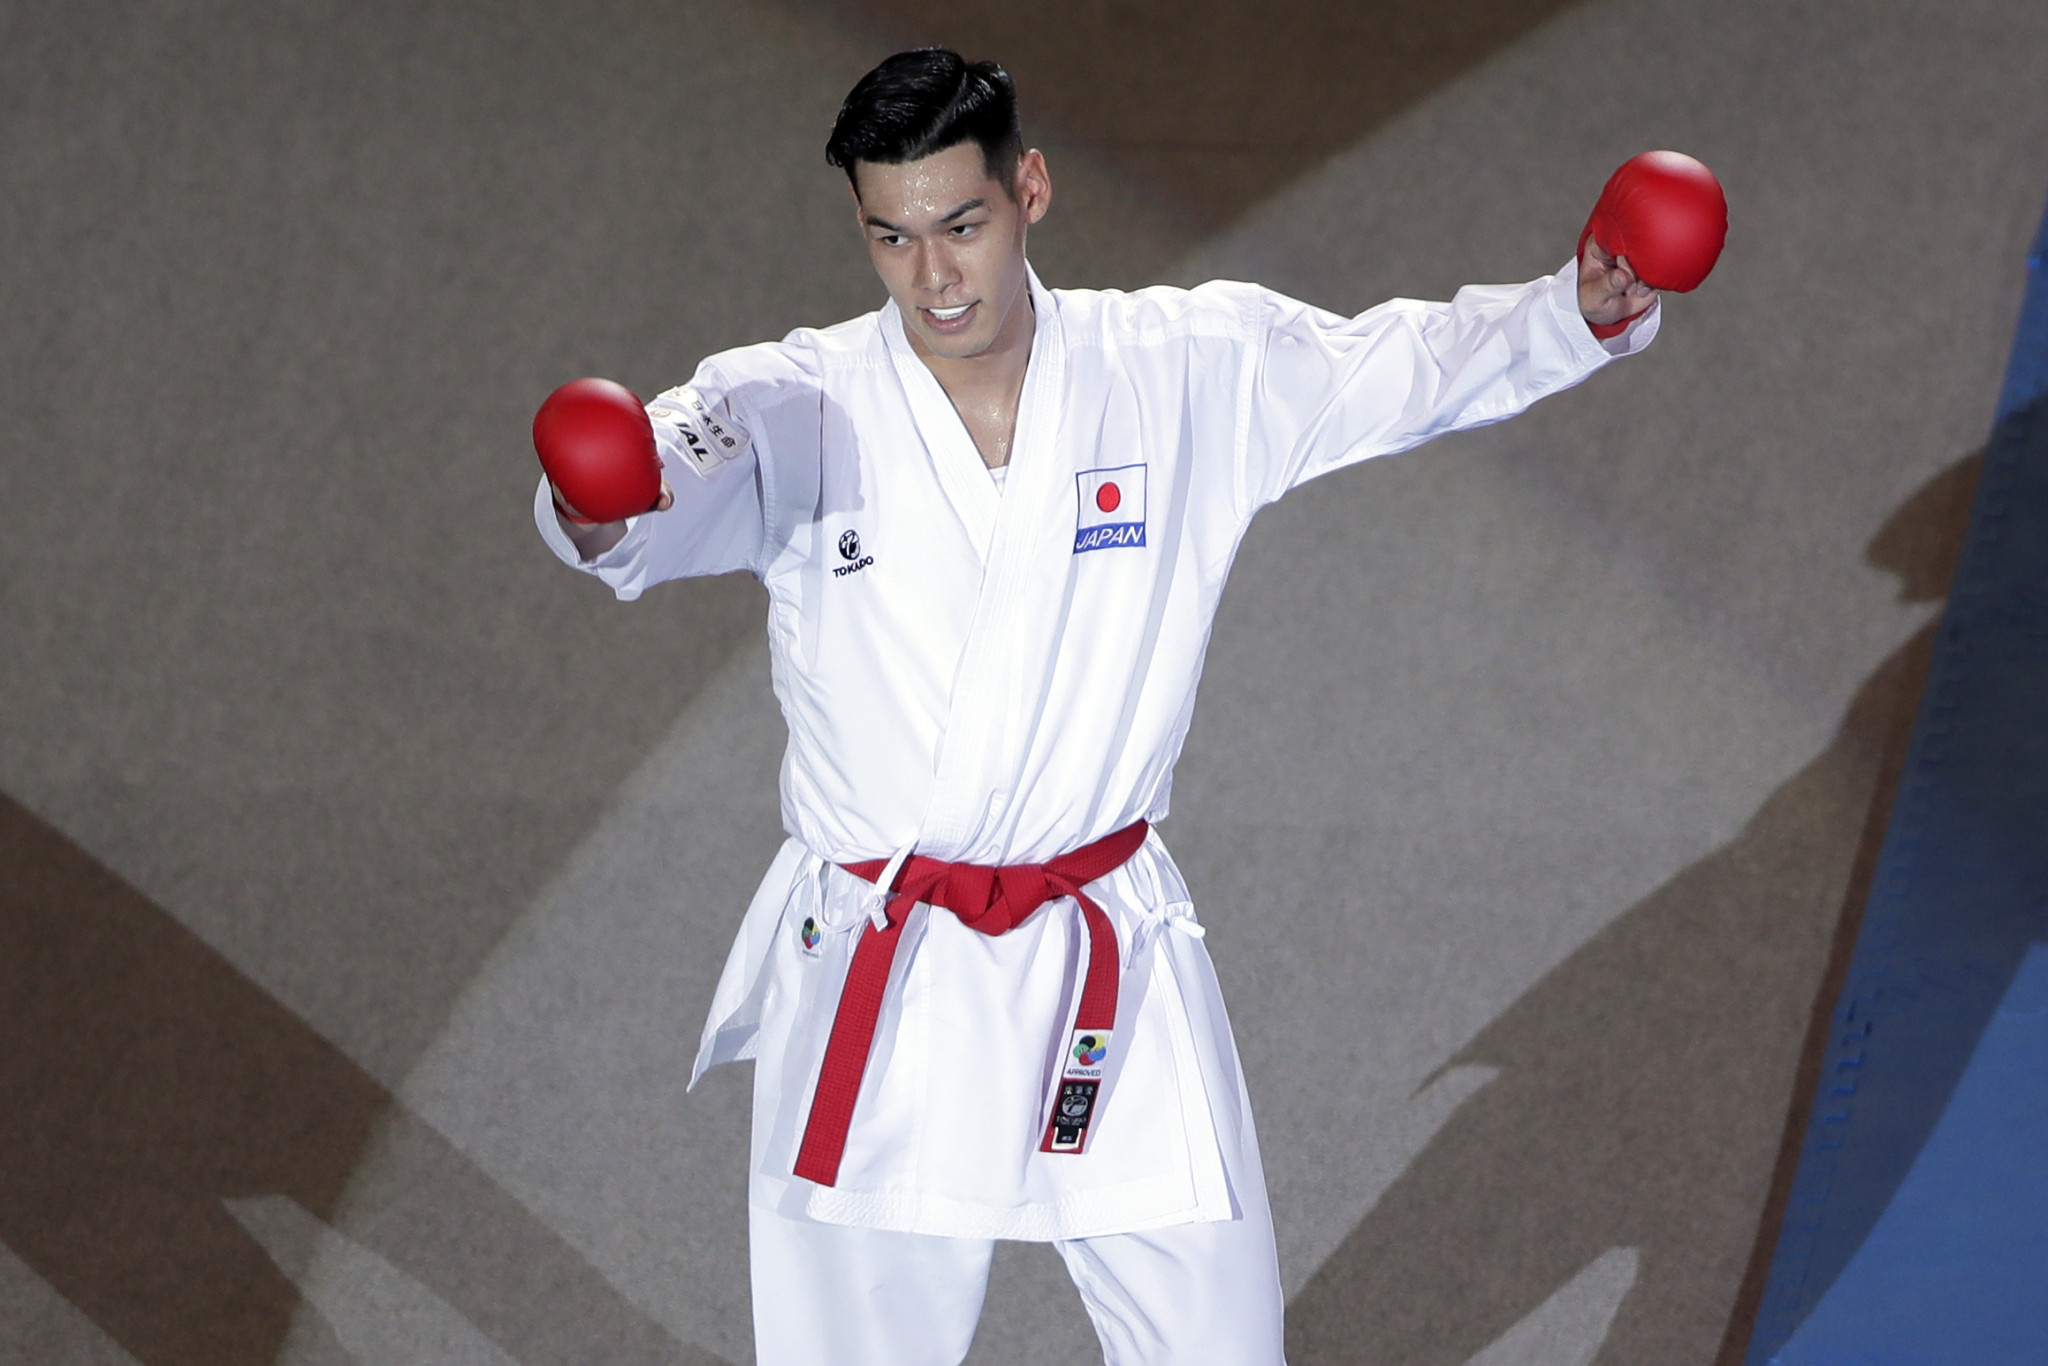 Nishimura claims "karate has become fun again" during pandemic